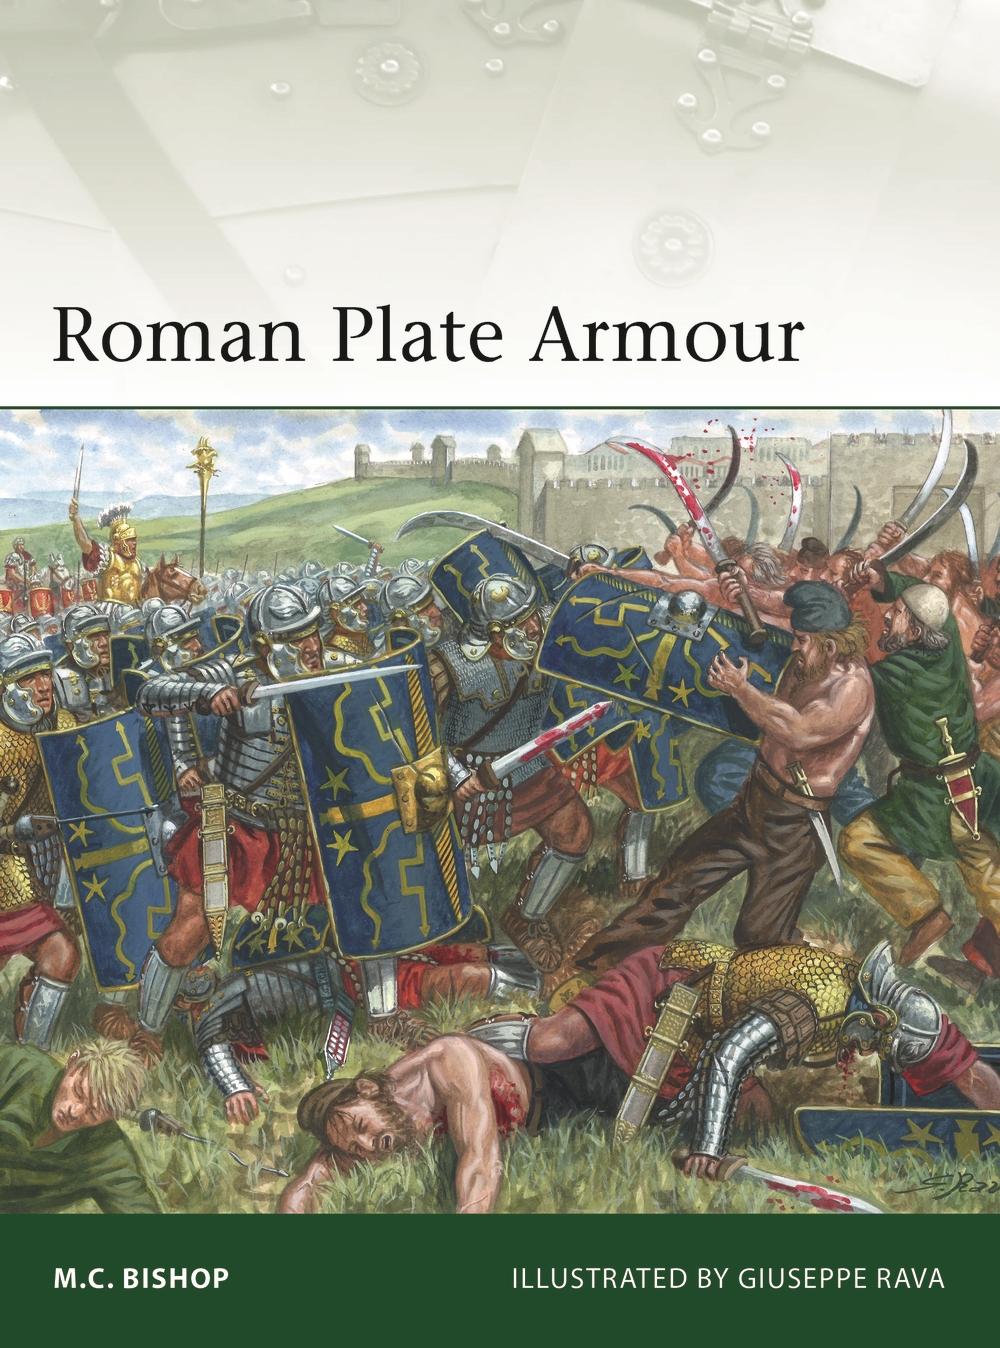 Roman Plate Armour book jacket